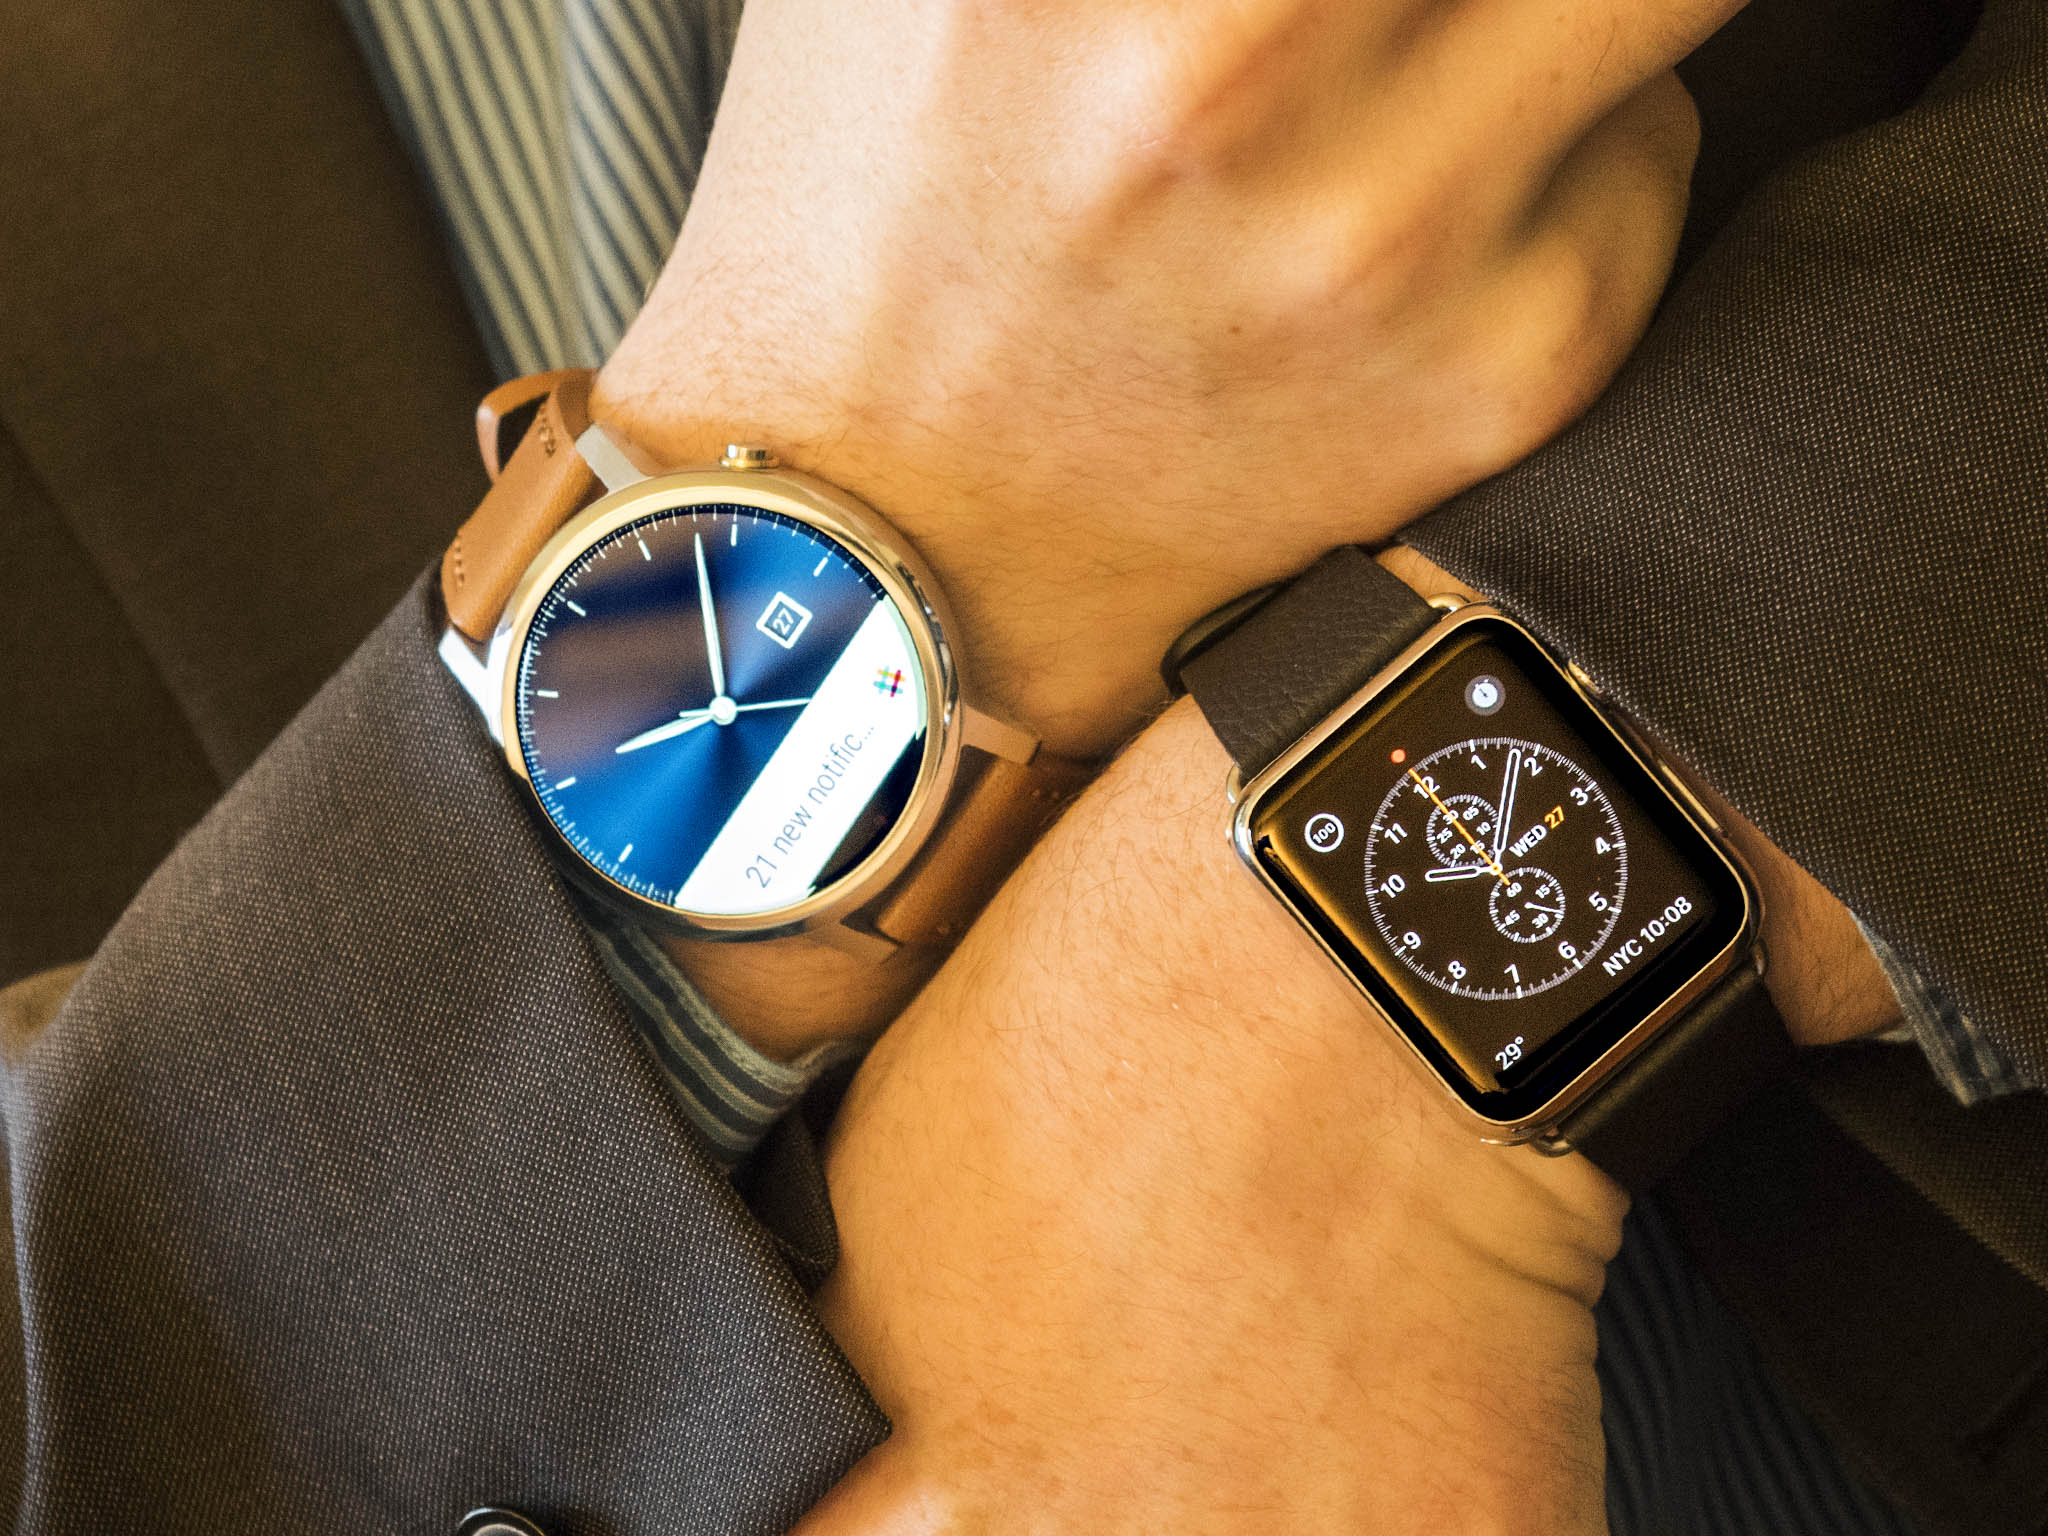 Веар про часы. Часы блоггеров. Galaxy watch циферблаты. Wearing Apple watch. Ролексы картинка на айпл вотч.